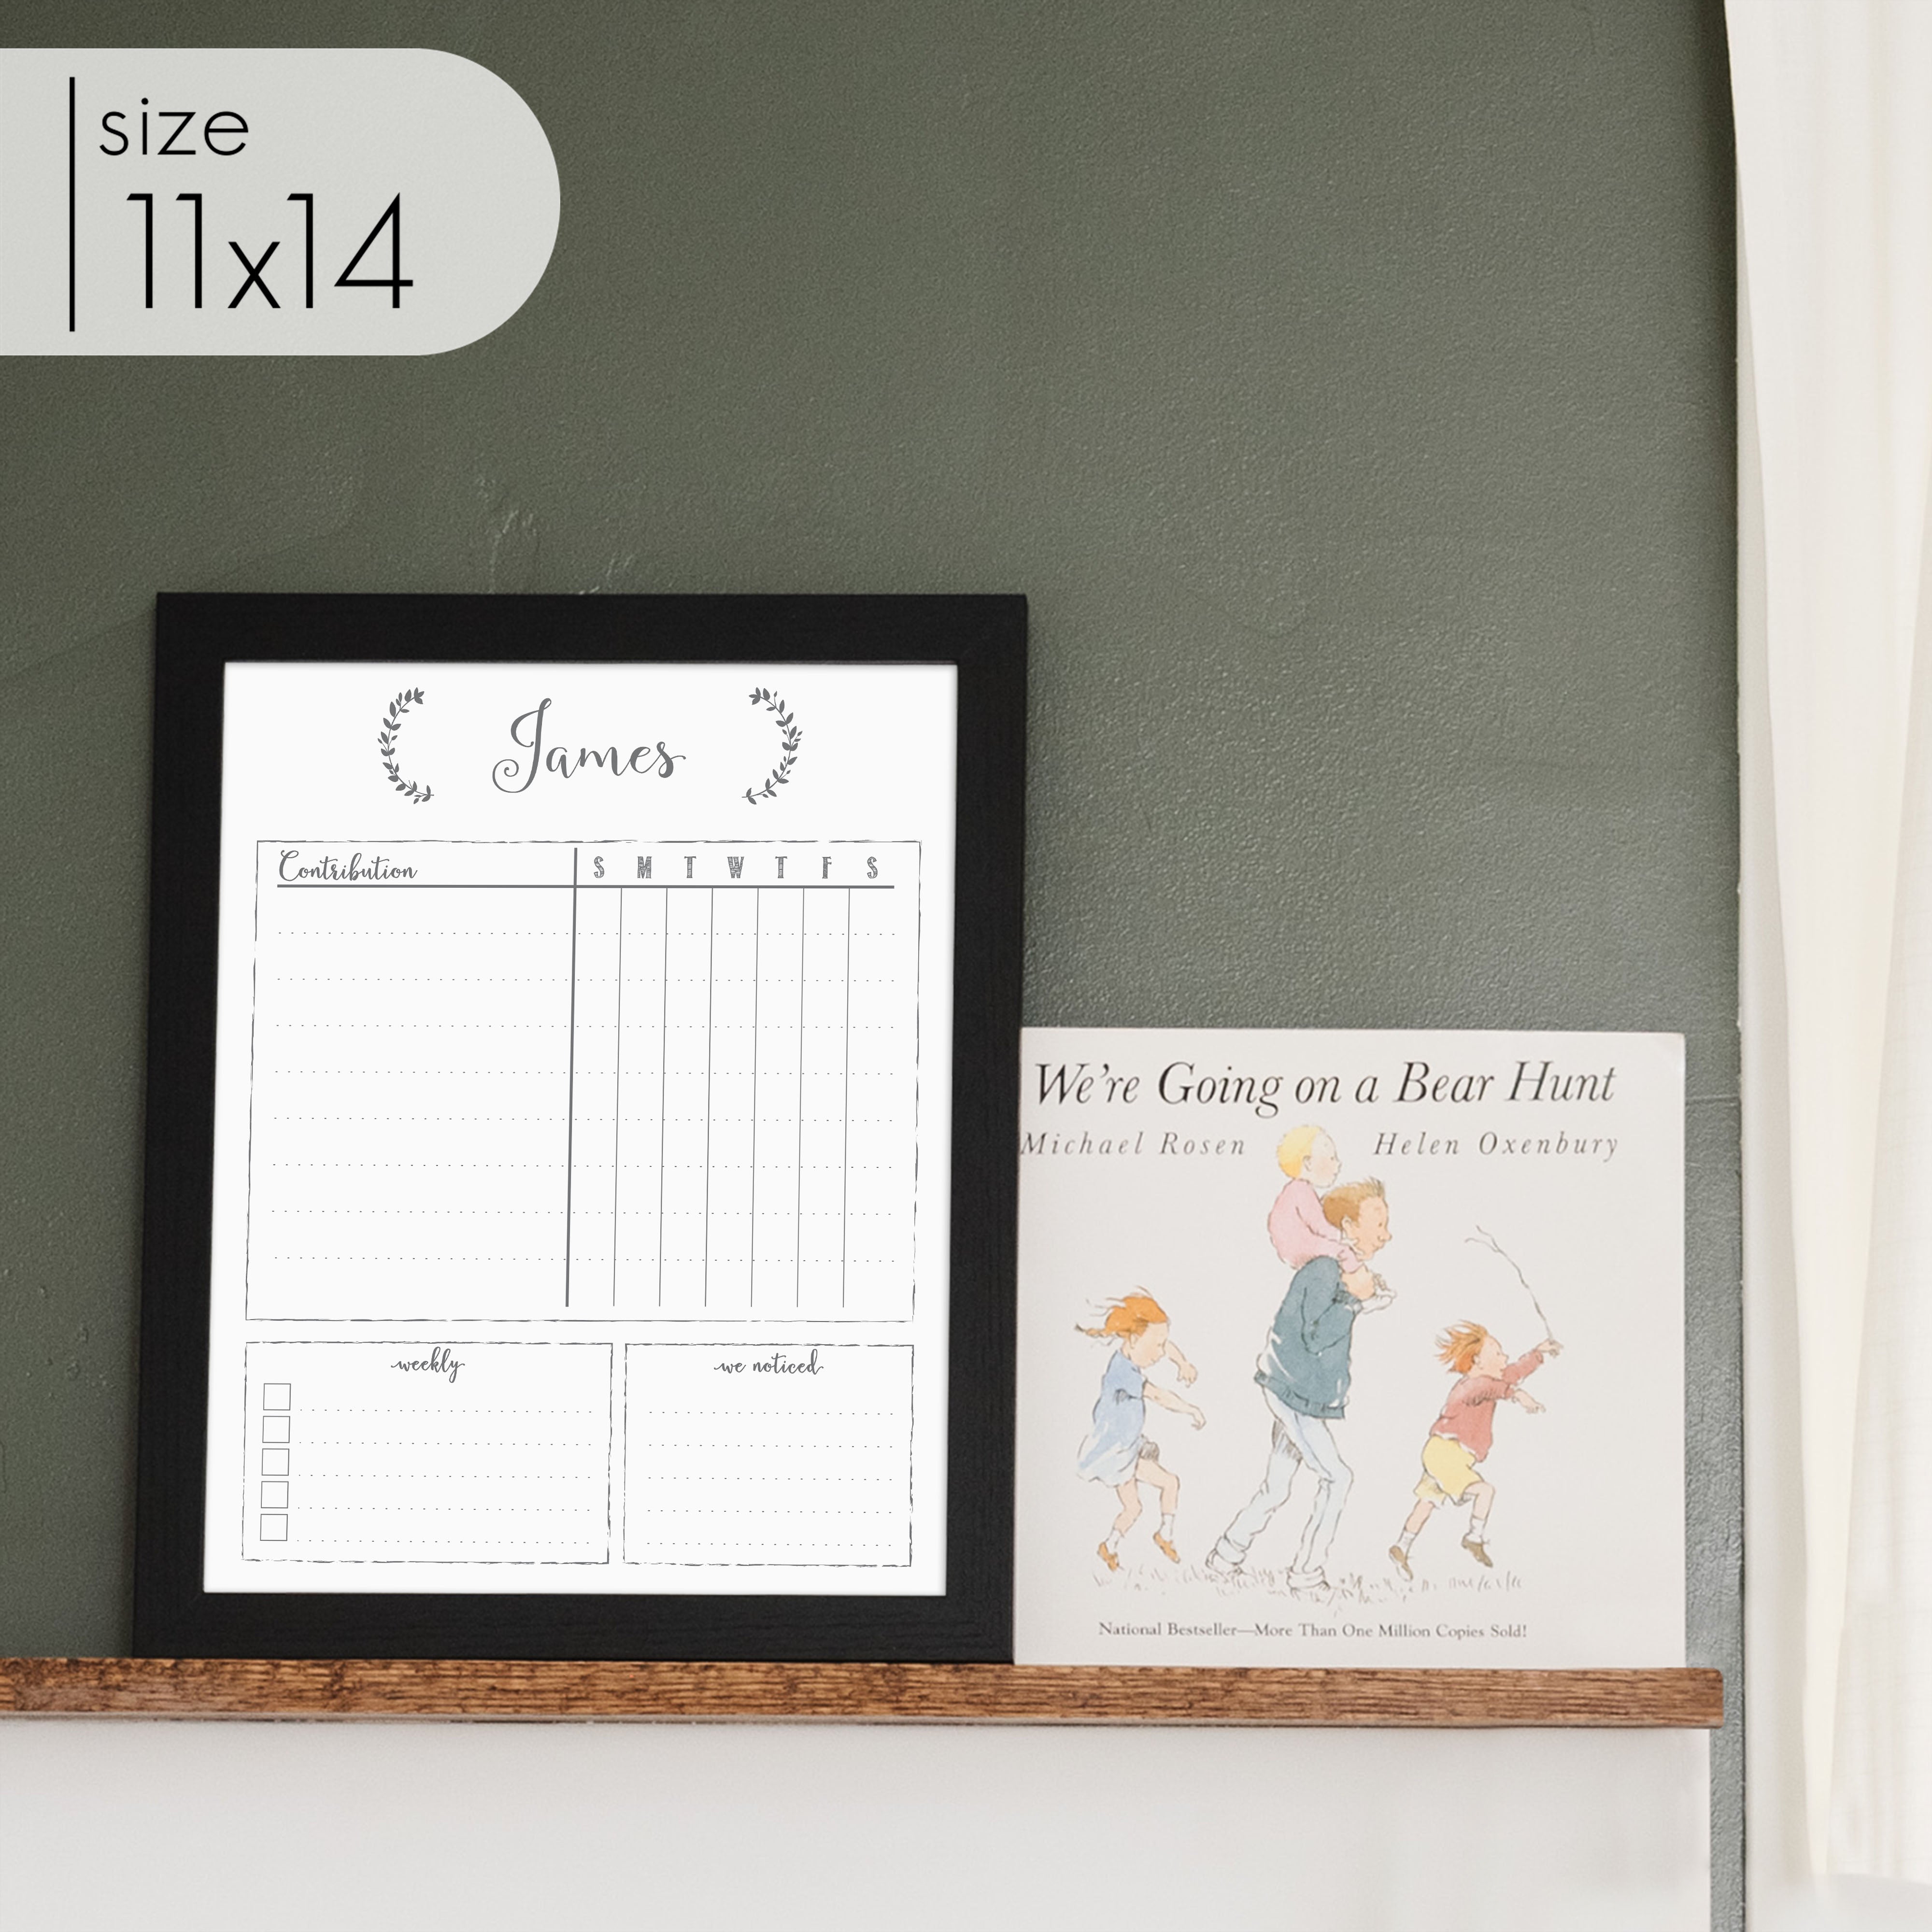 1 Person Framed Whiteboard Chore Chart  | Vertical Eagleton